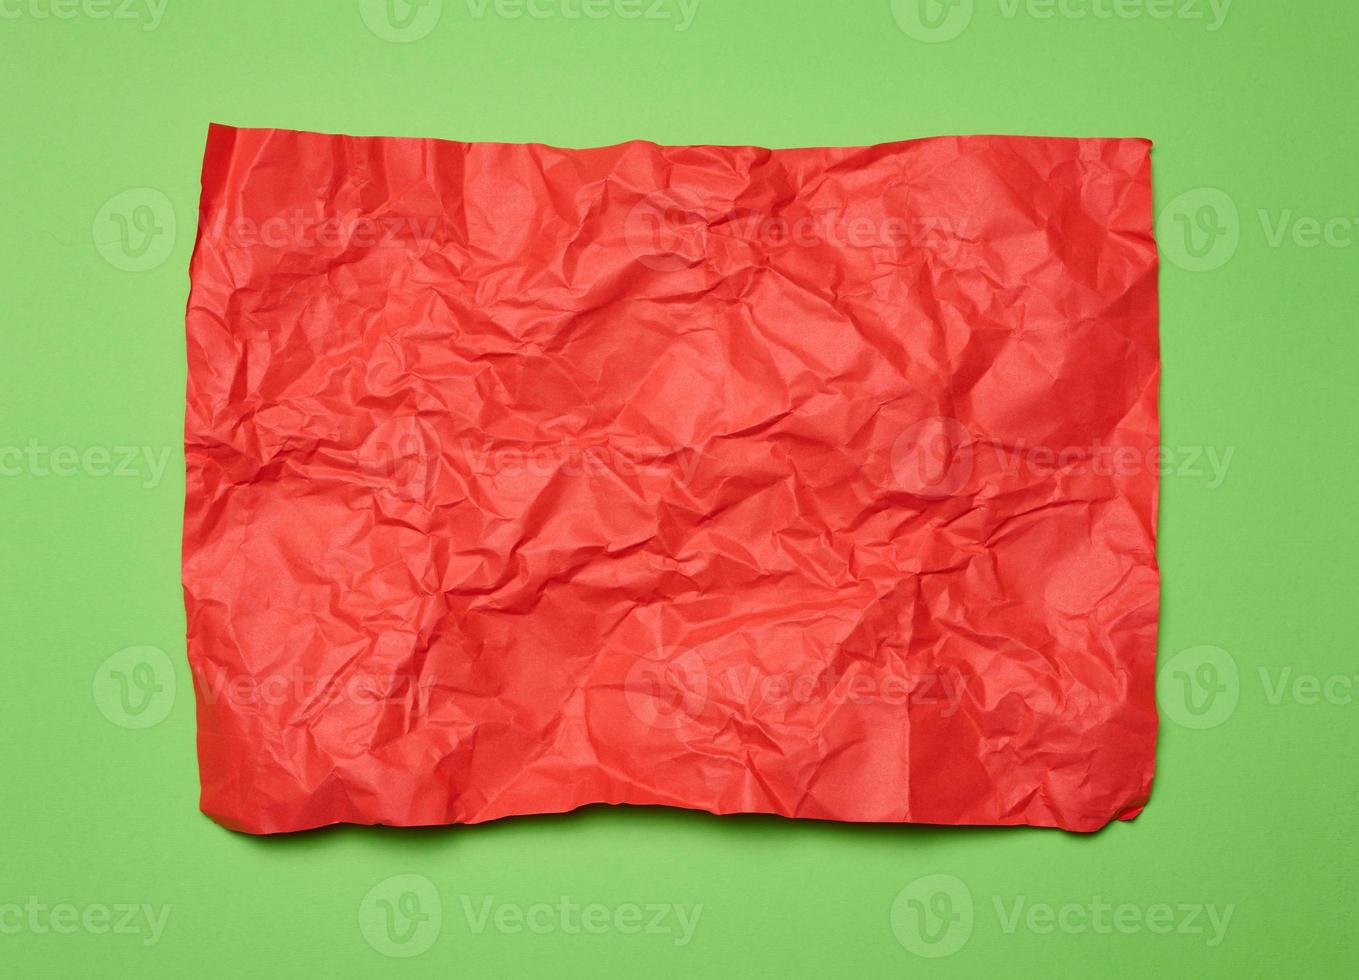 estropeado rectangular sábana de rojo papel en un verde fondo, parte superior vista. sitio para inscripción foto